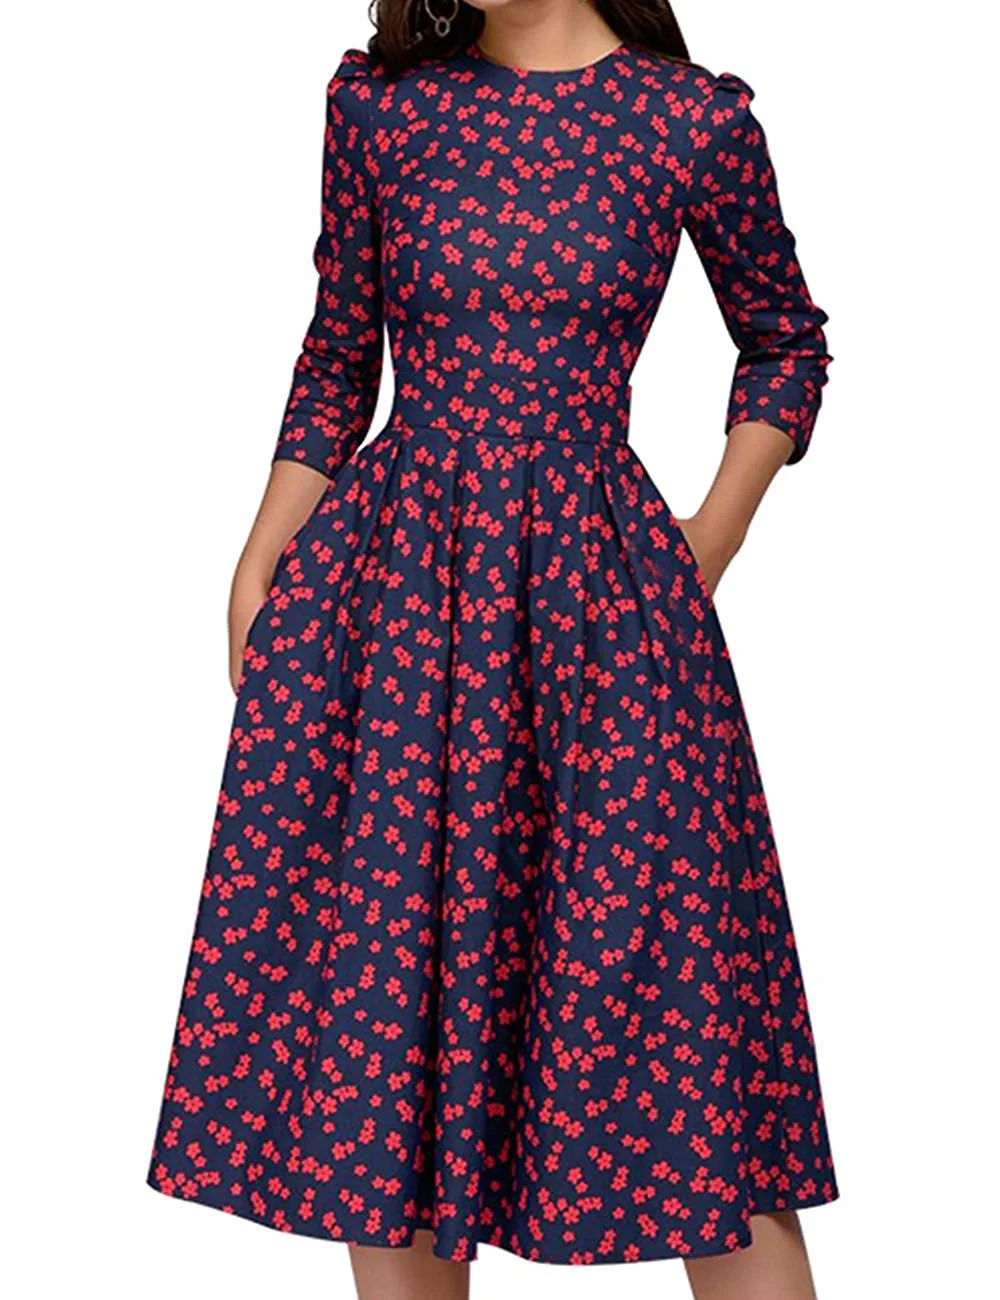 Women's Floral Vintage Dress Elegant Midi Evening Dress 3/4 Sleeves